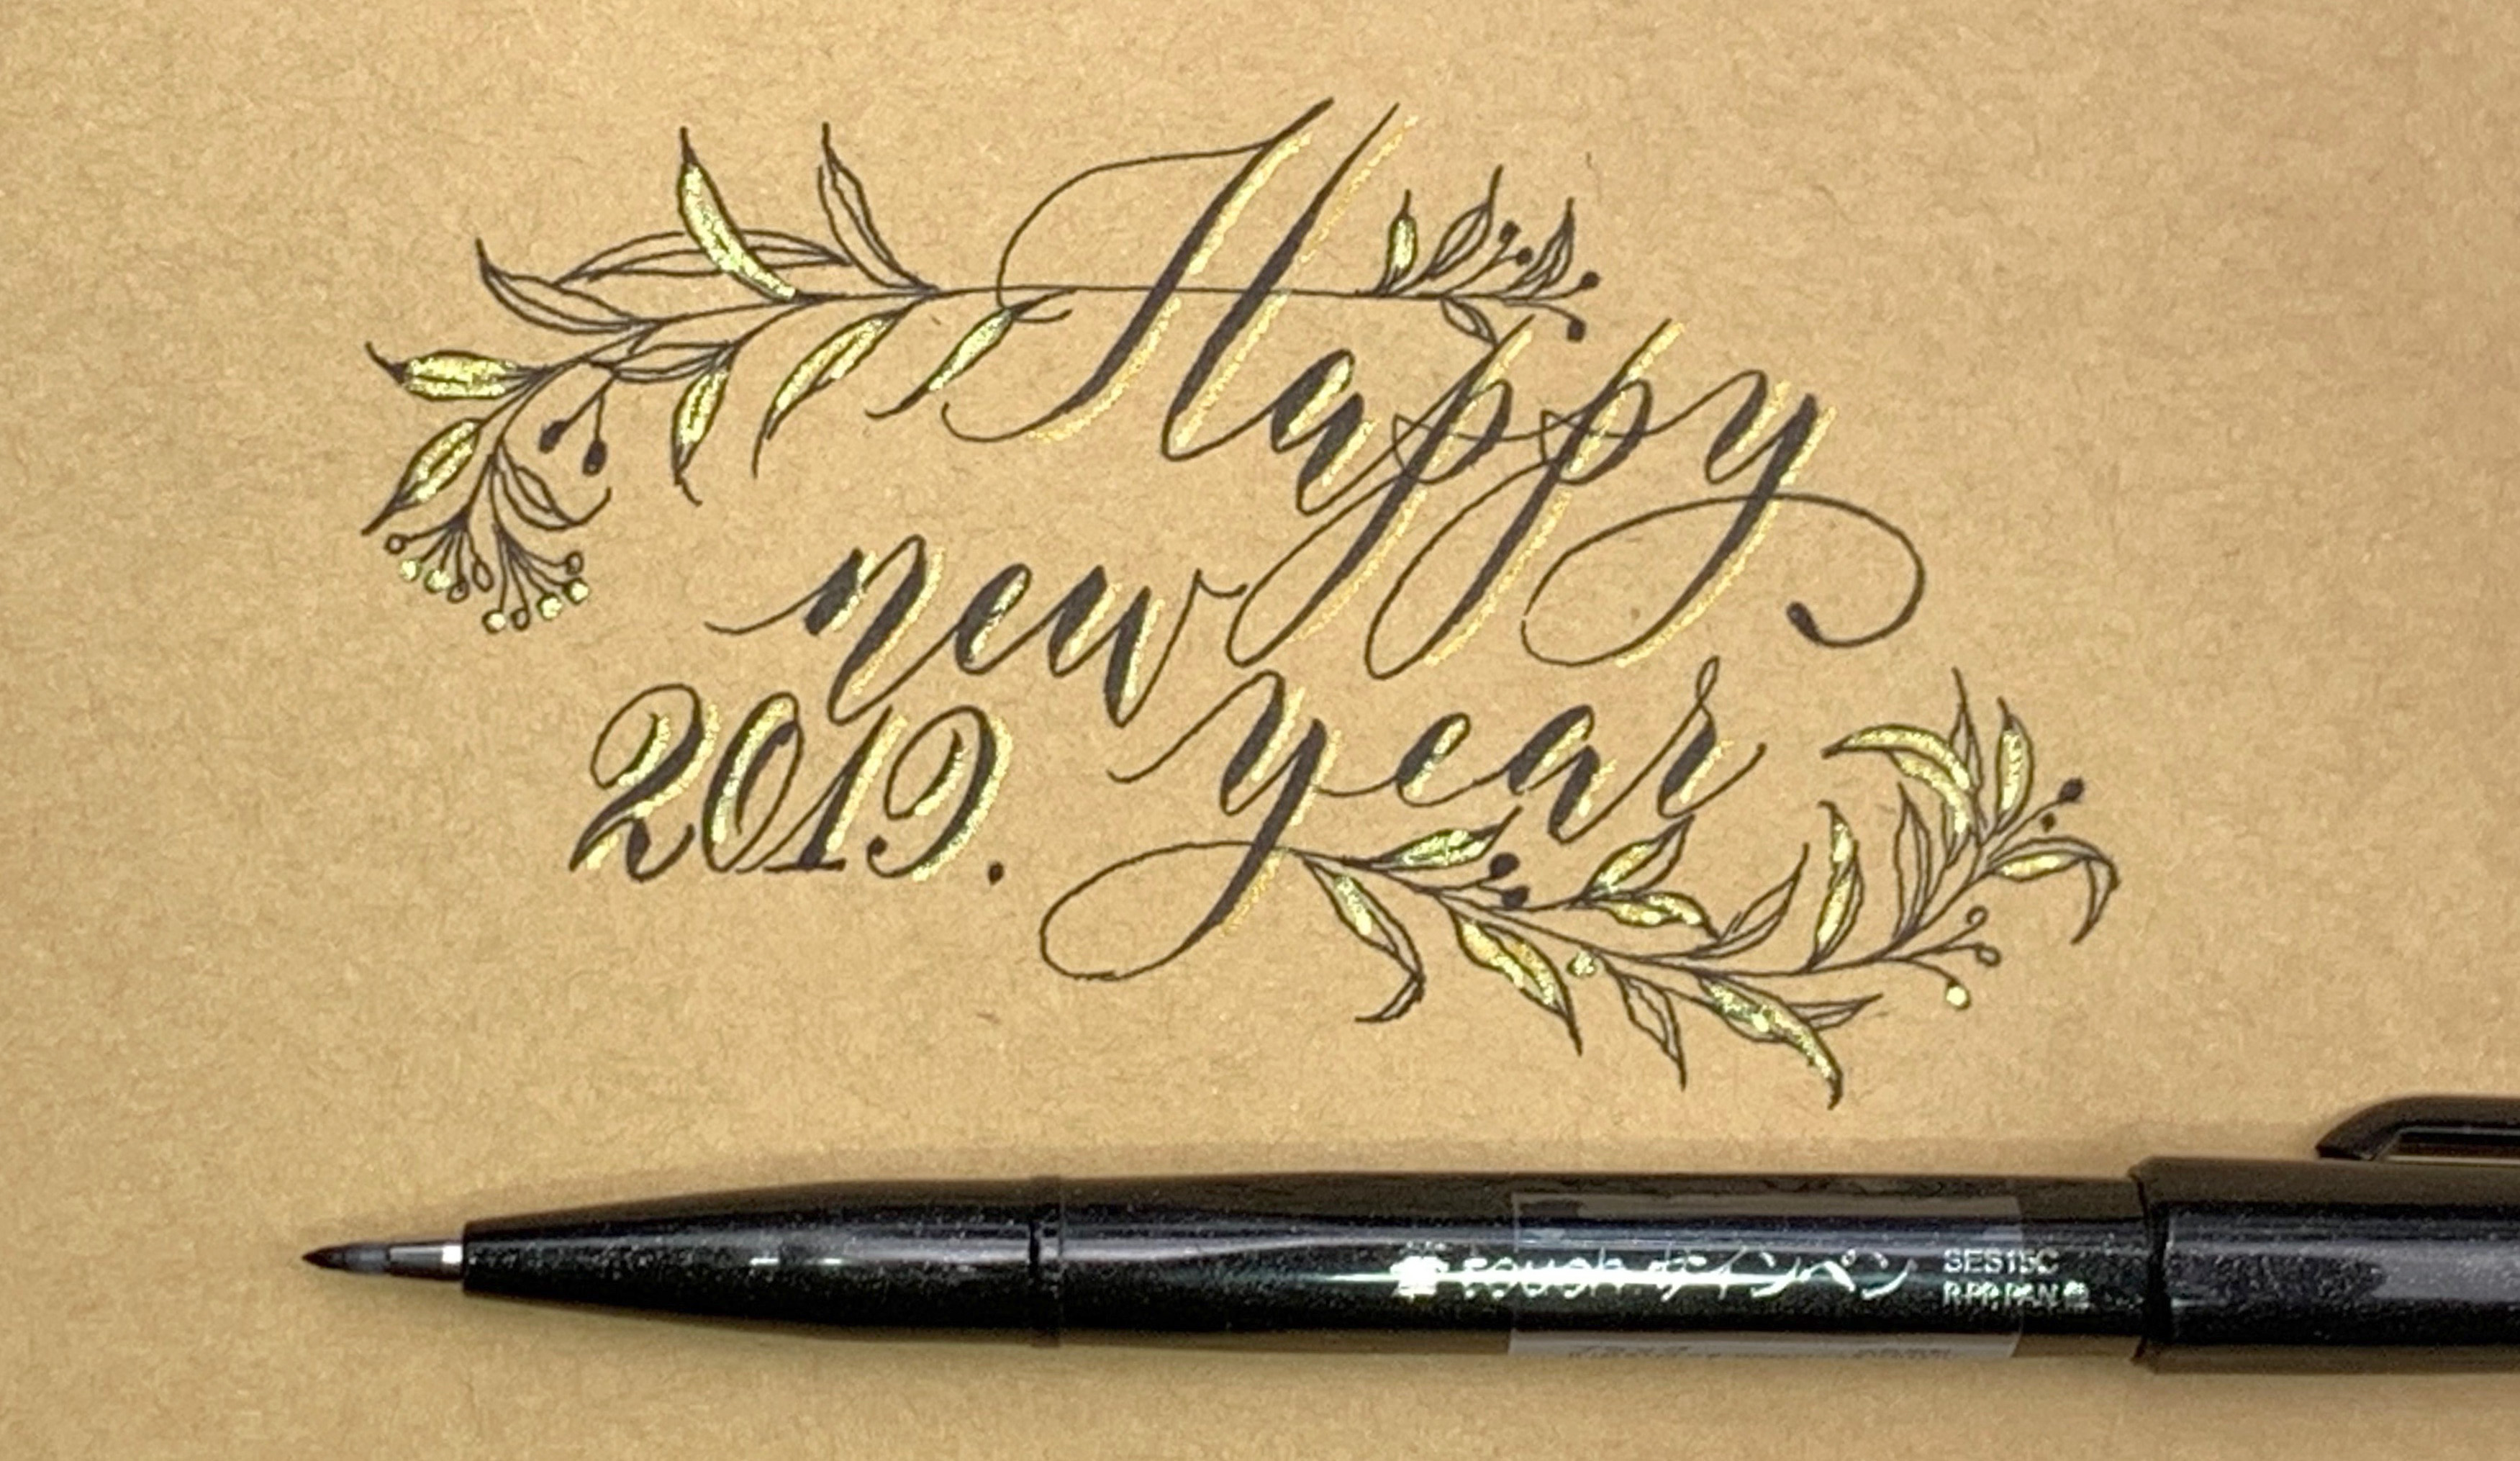 2019 happy new year